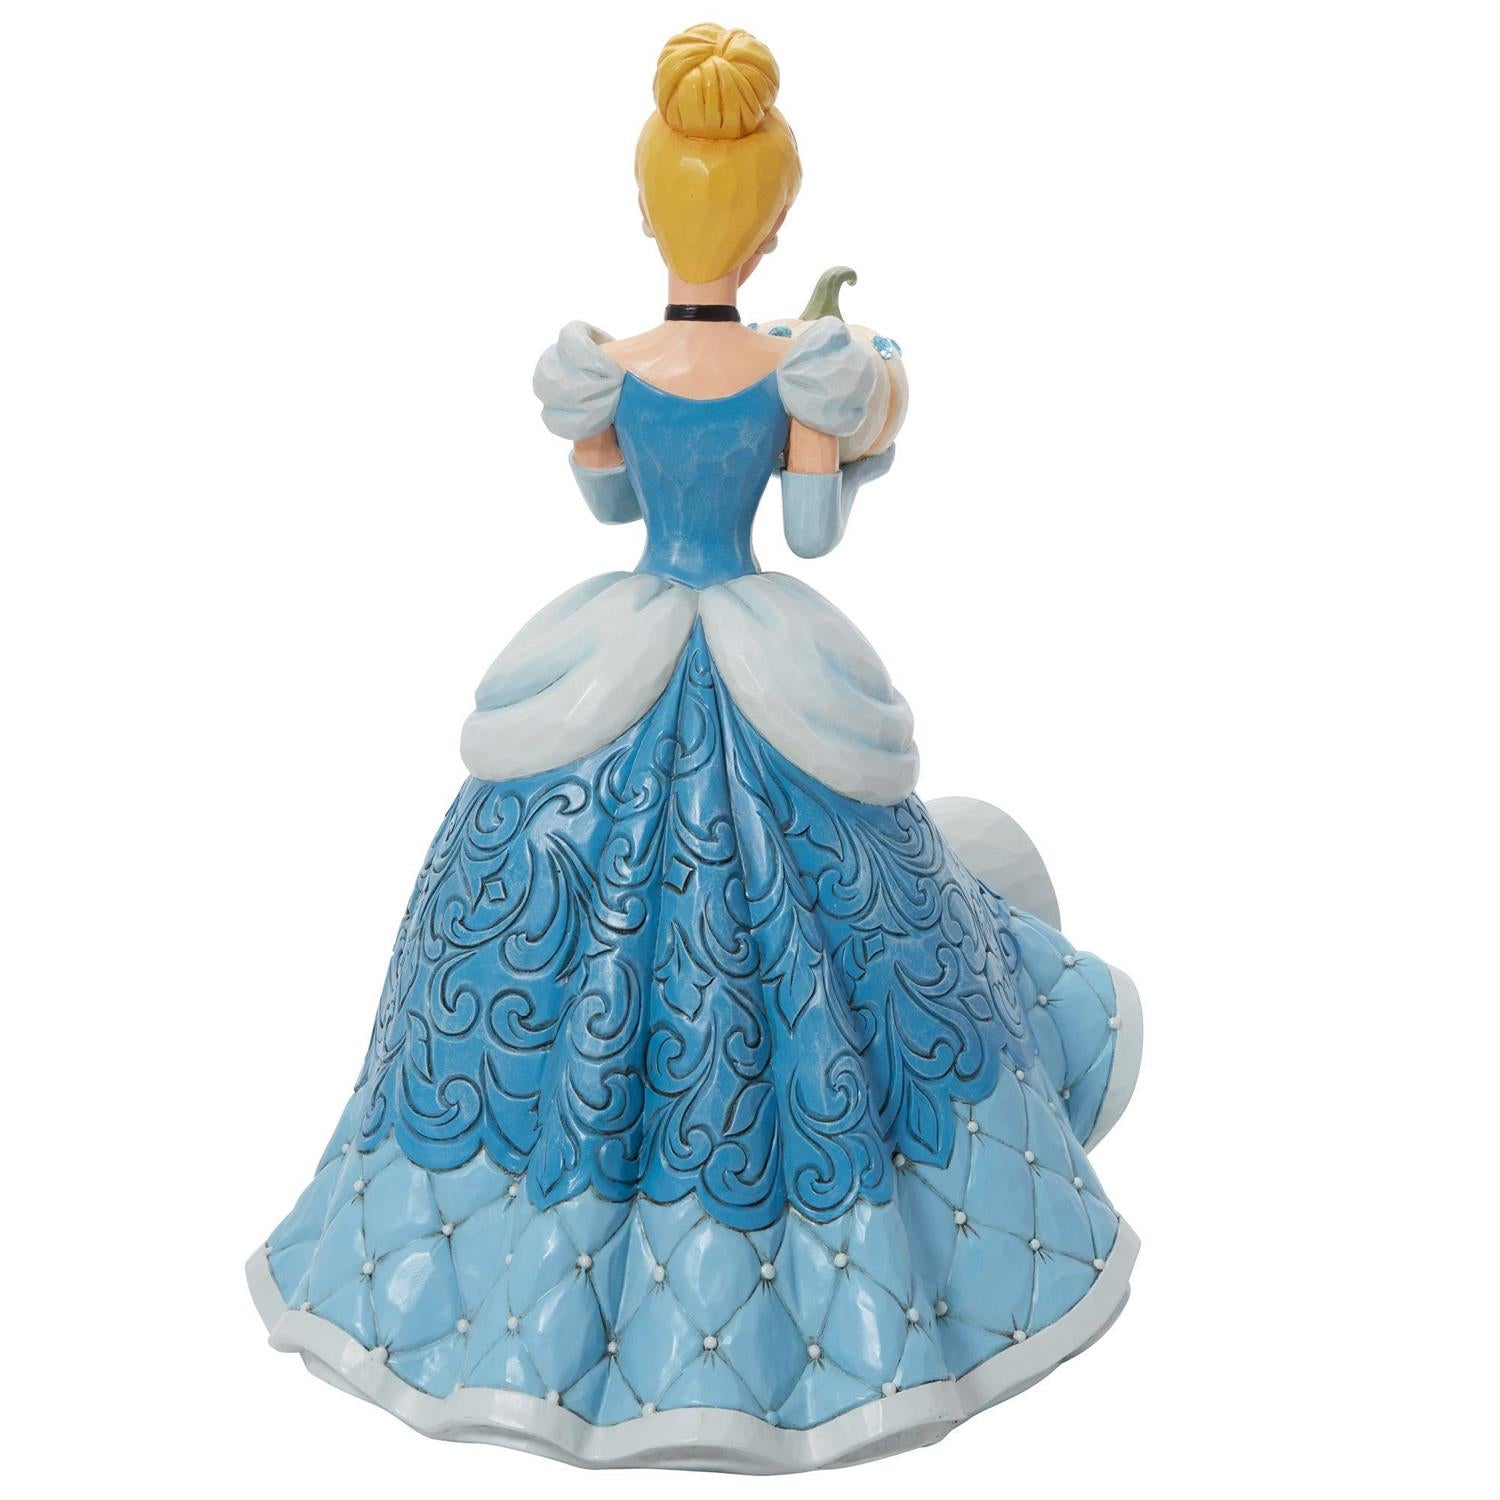 Cinderella holding a pumpkin - back view